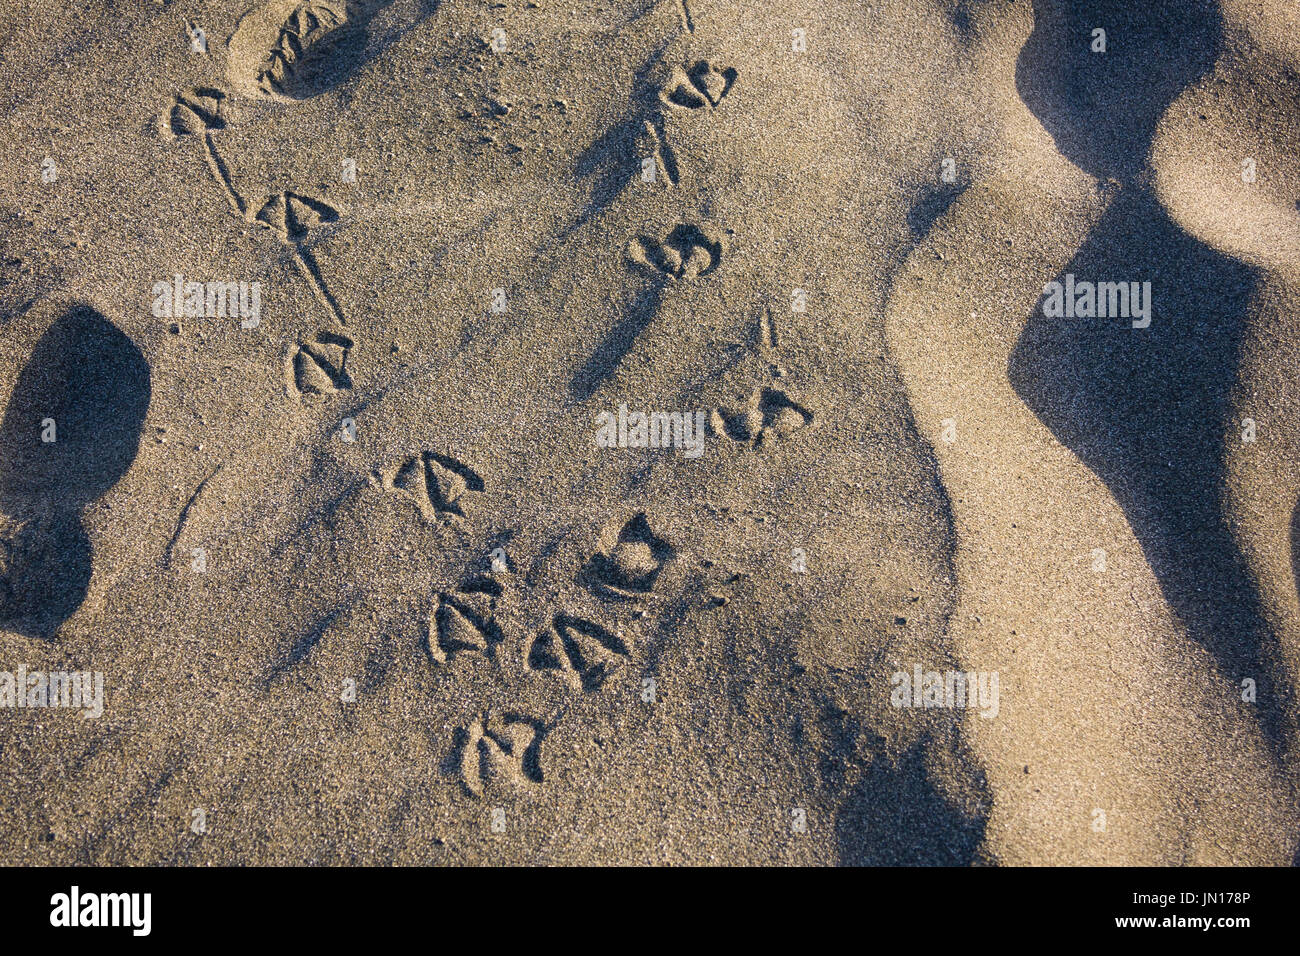 animal feet imprint on beach sand Stock Photo